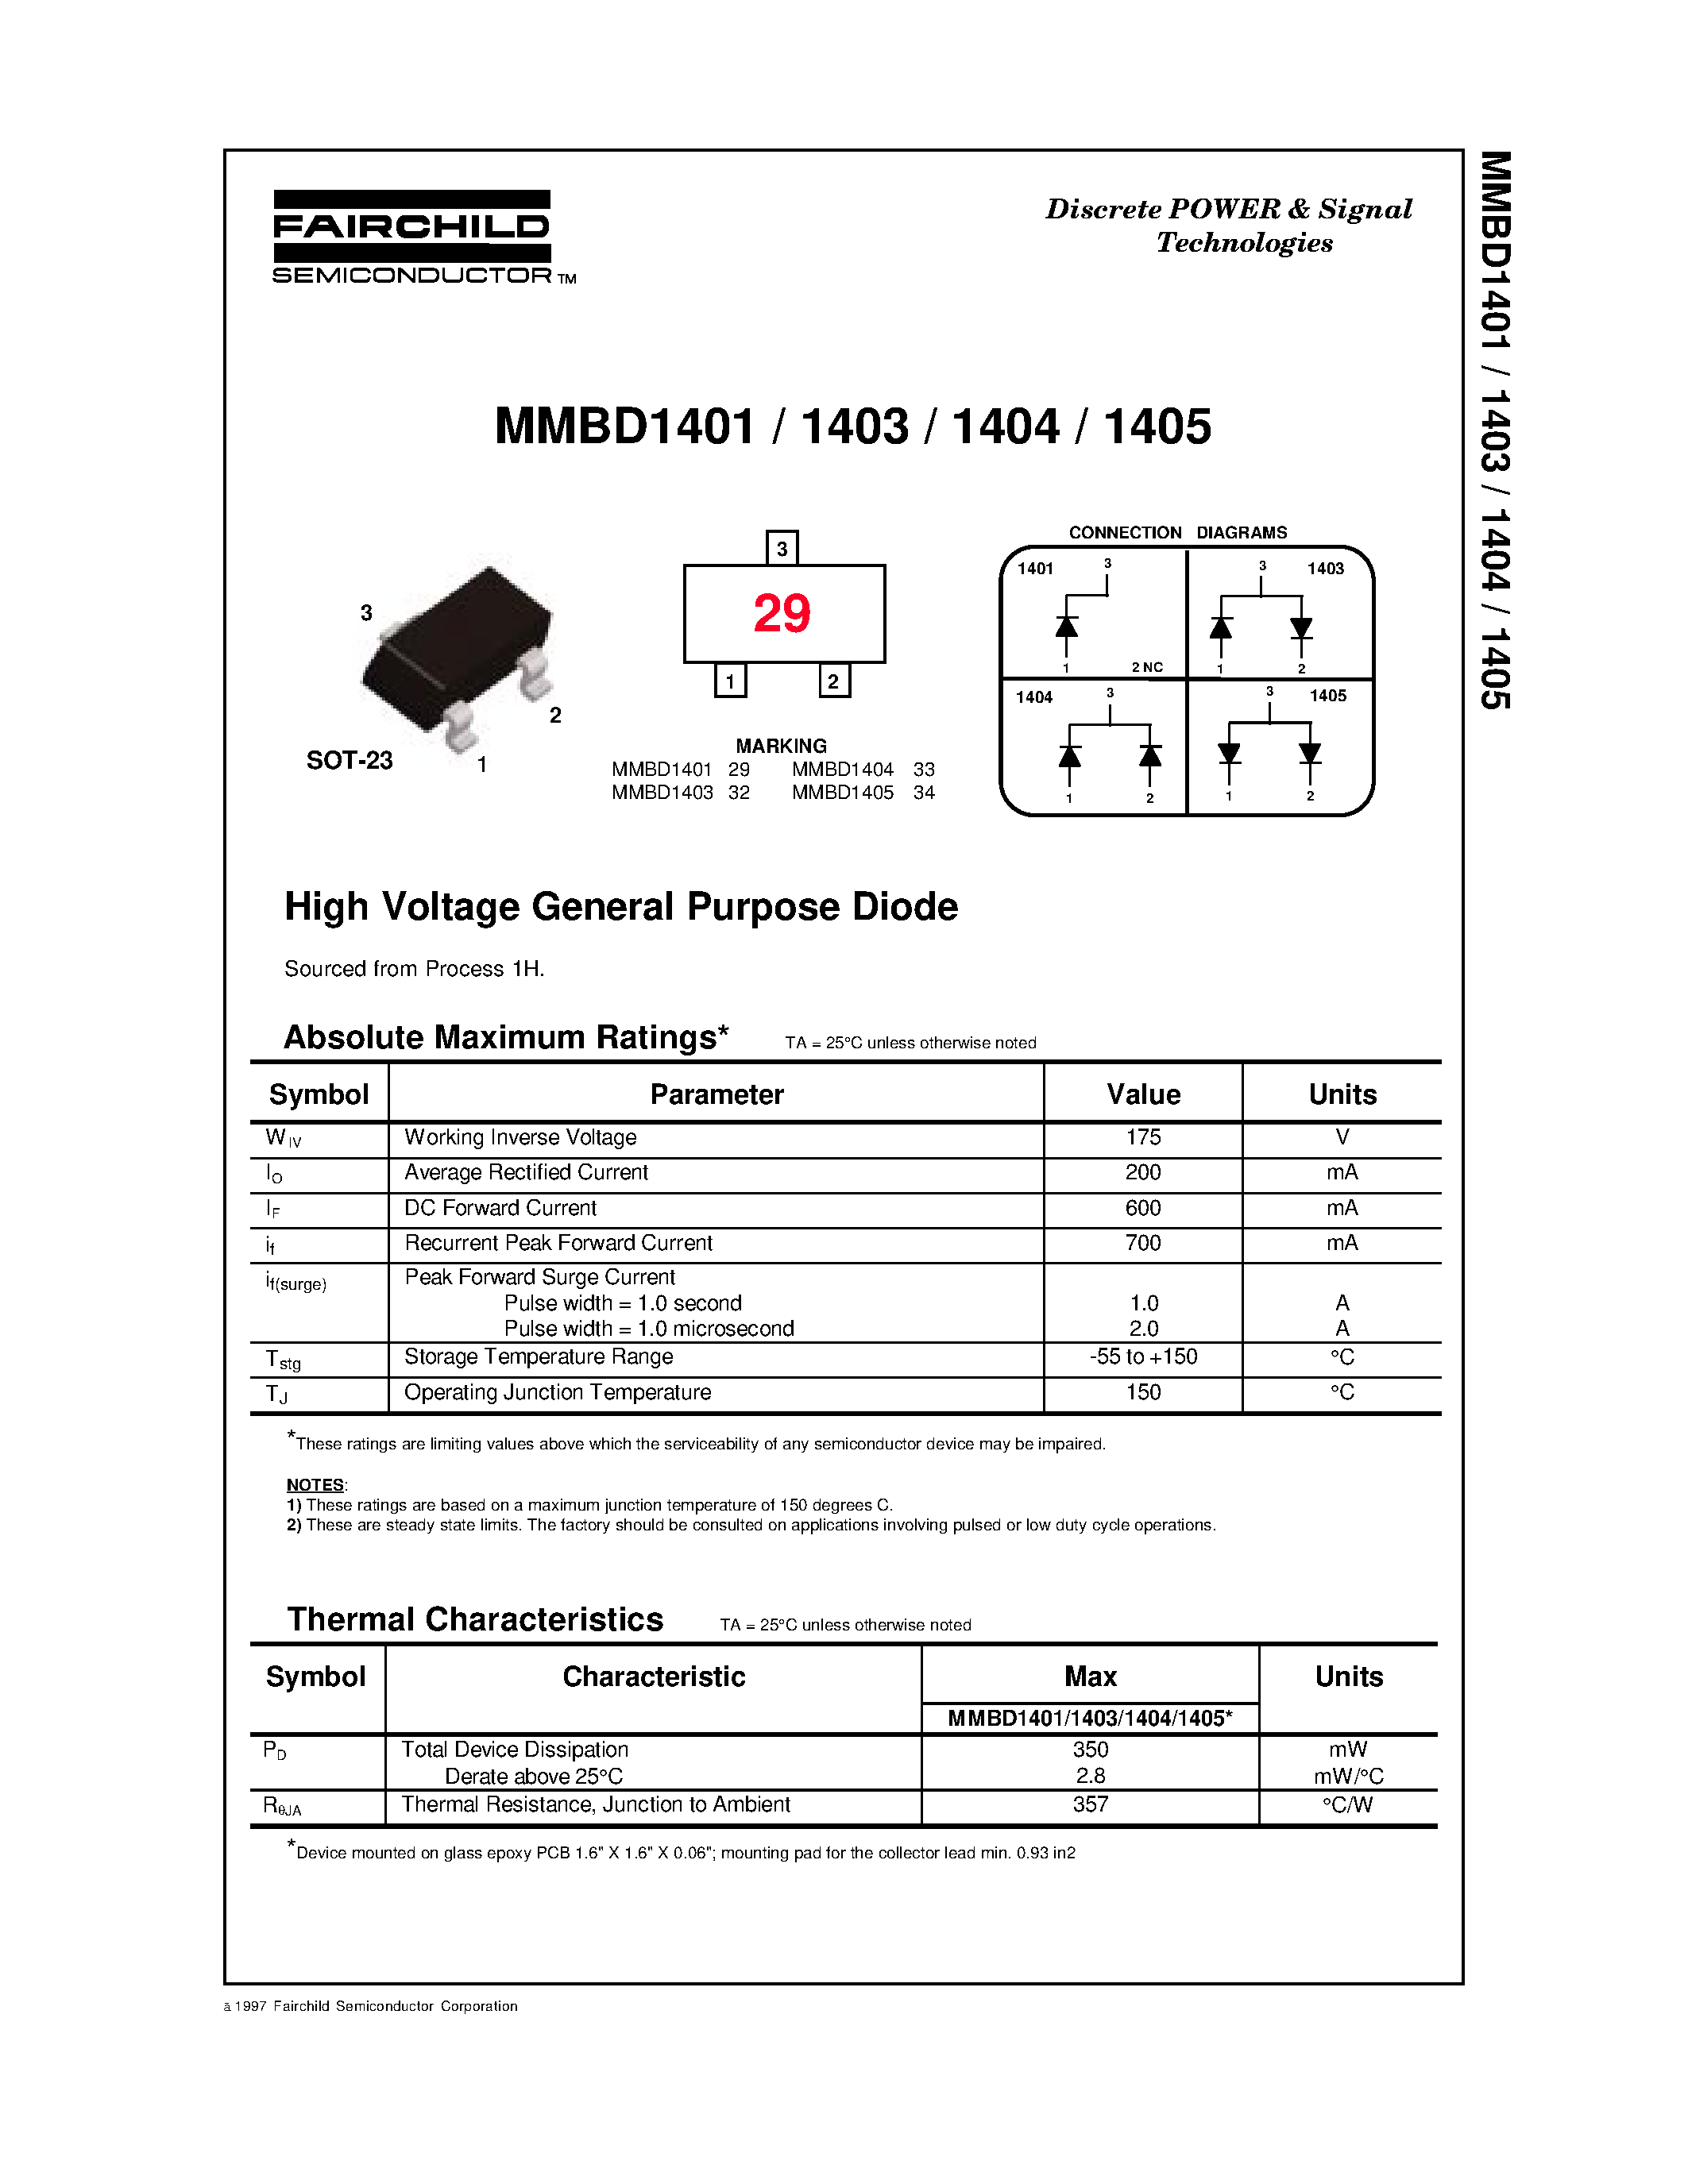 Datasheet MMBD1403 - High Voltage General Purpose Diode page 1